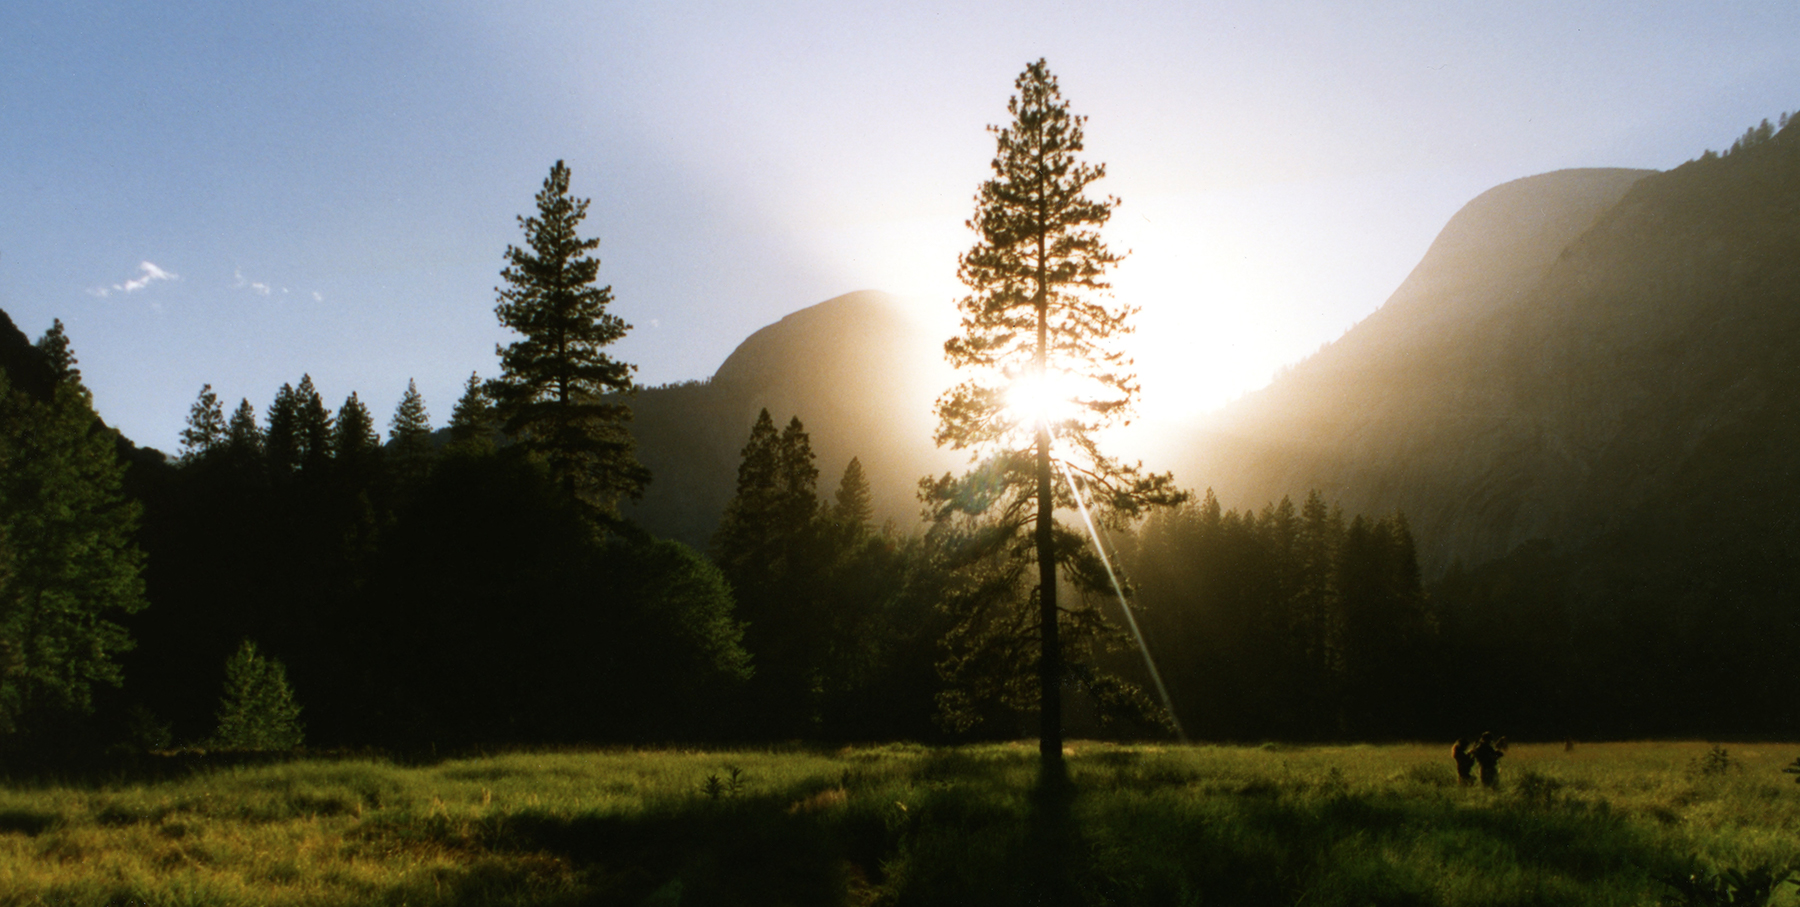 Sunlight filtering through a pine tree